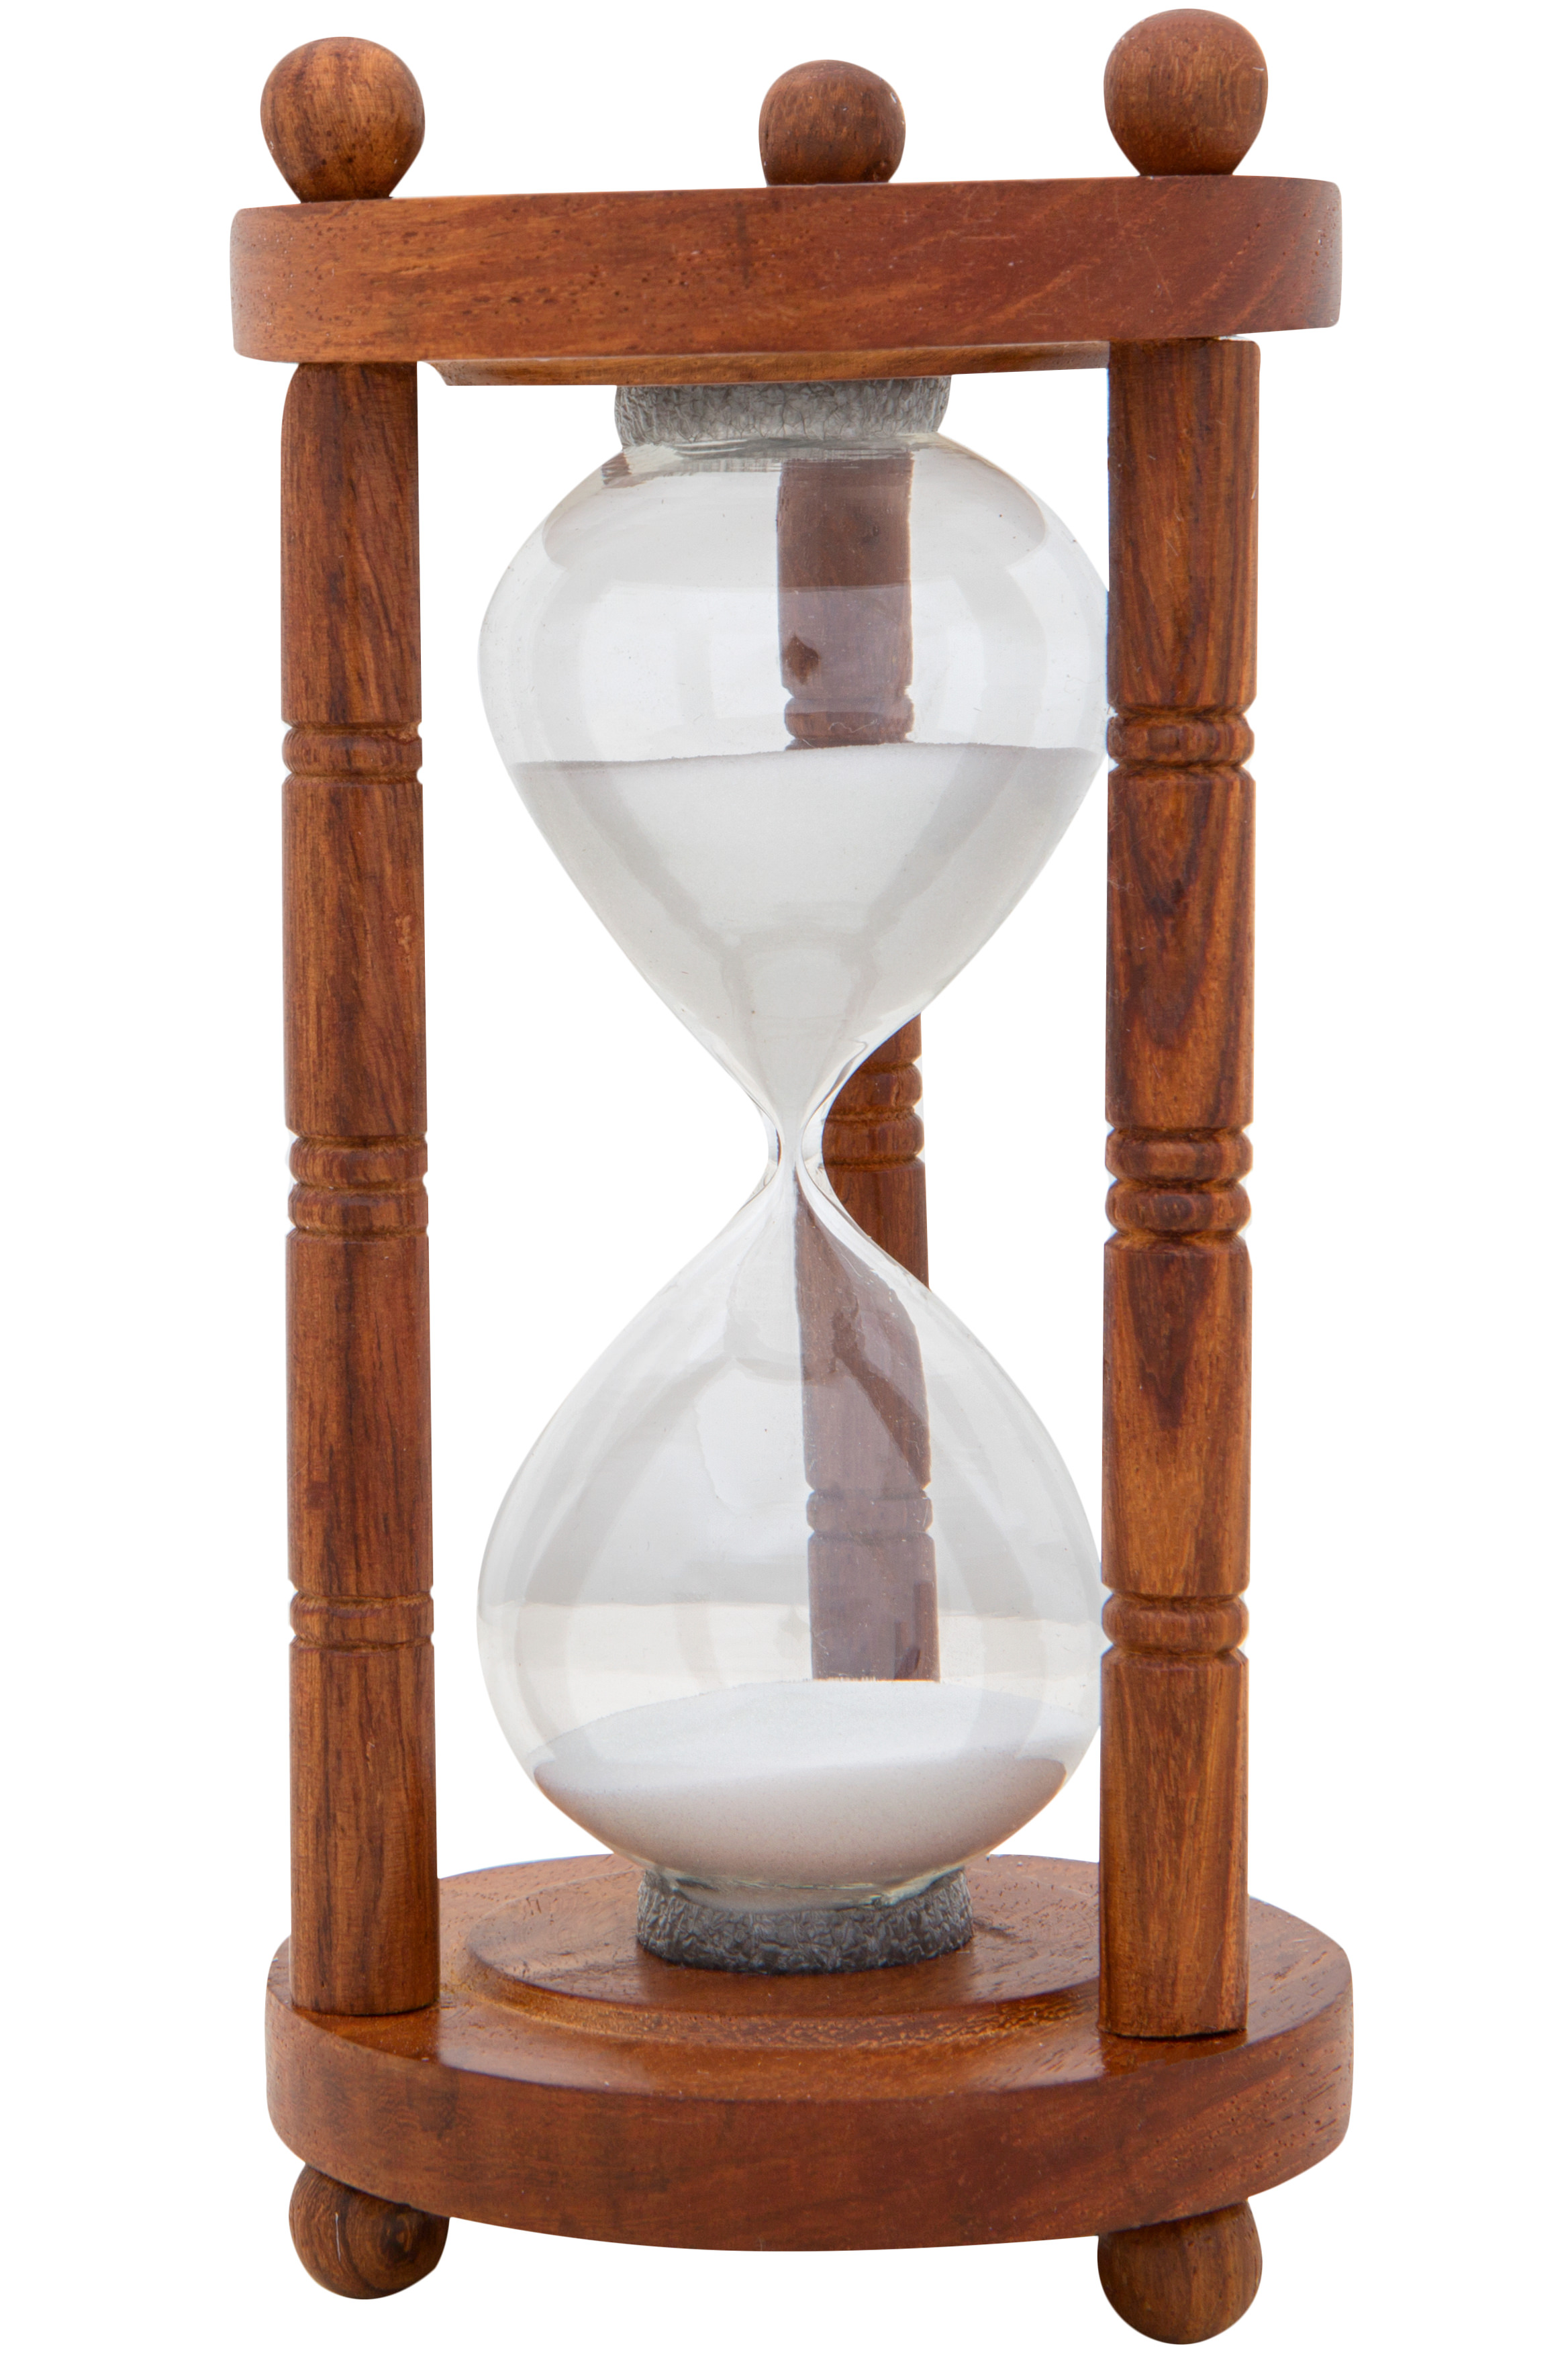 Sanduhr Stundenglas Messing Holz mit 3 Säulen 15 Minuten sc-9182 